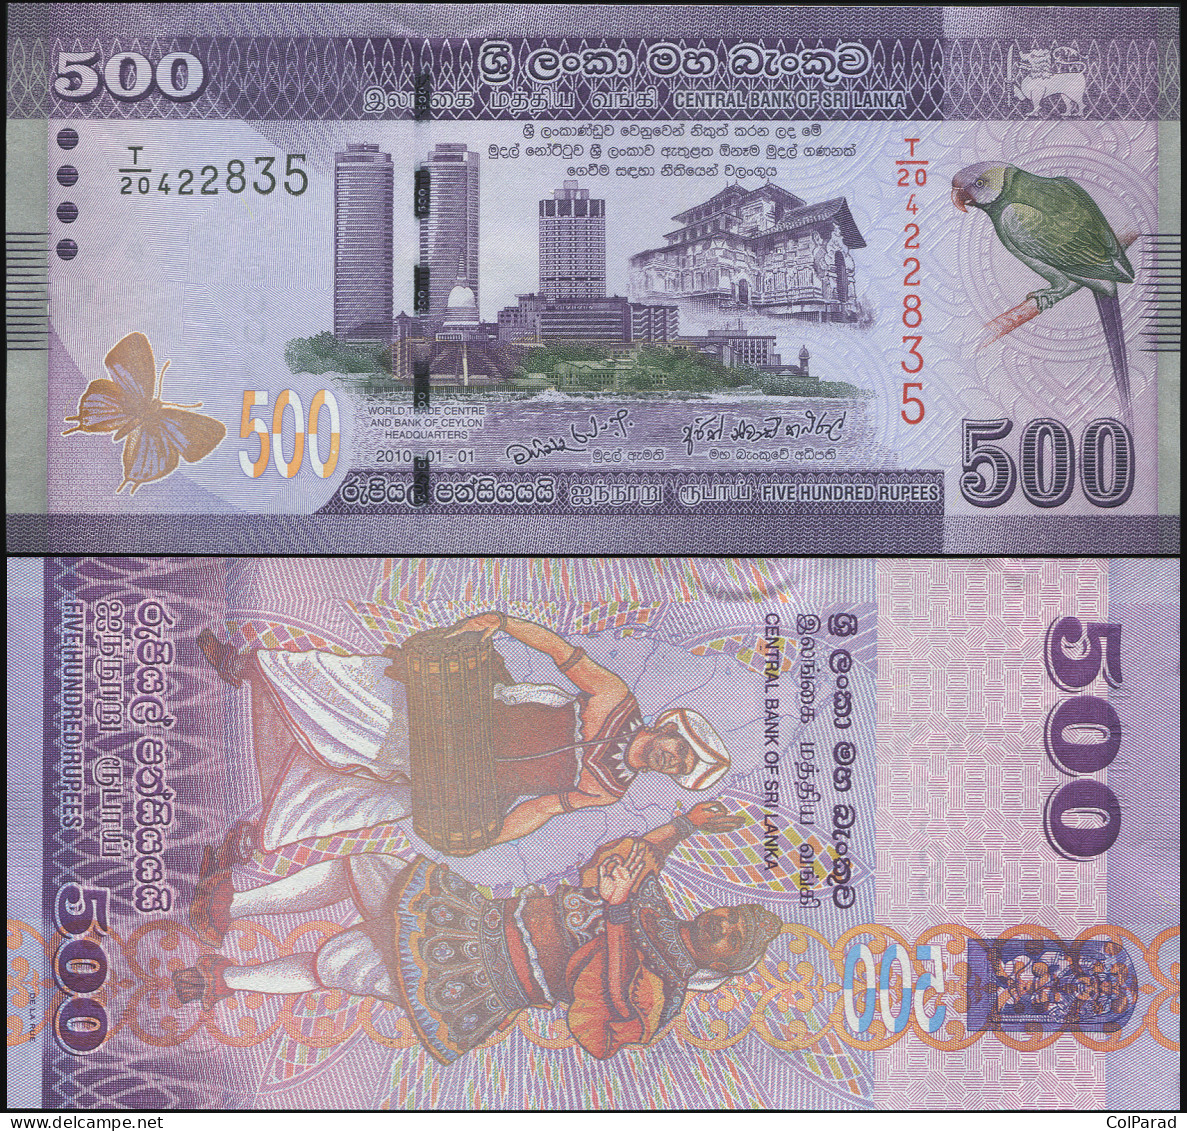 SRI LANKA 500 RUPEES - 01.01.2010 (2011) - Paper Unc - P.126a Banknote - Sri Lanka